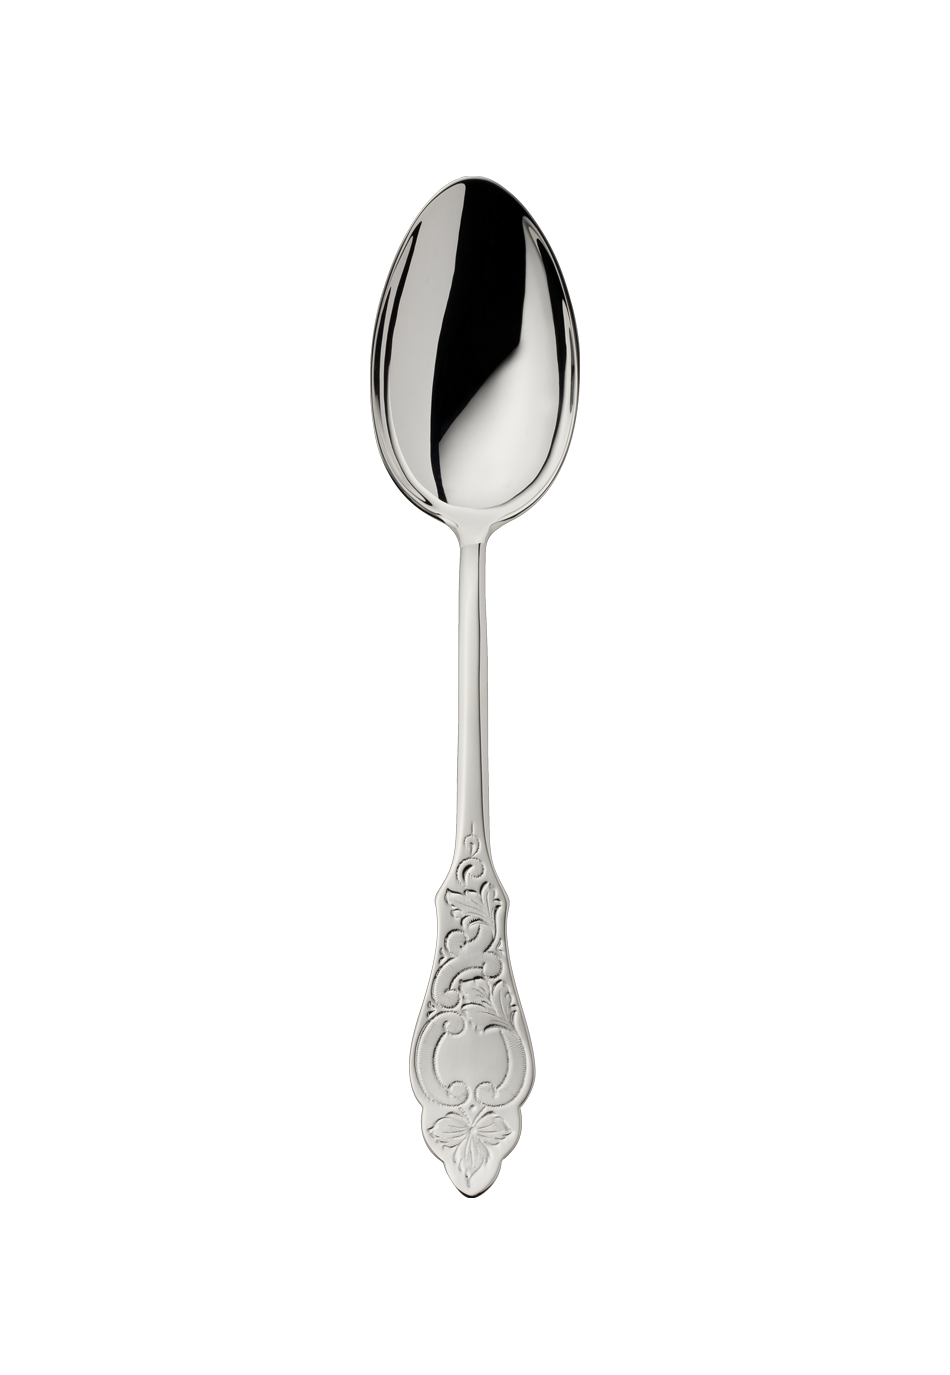 Ostfriesen Table Spoon (150g massive silverplated)